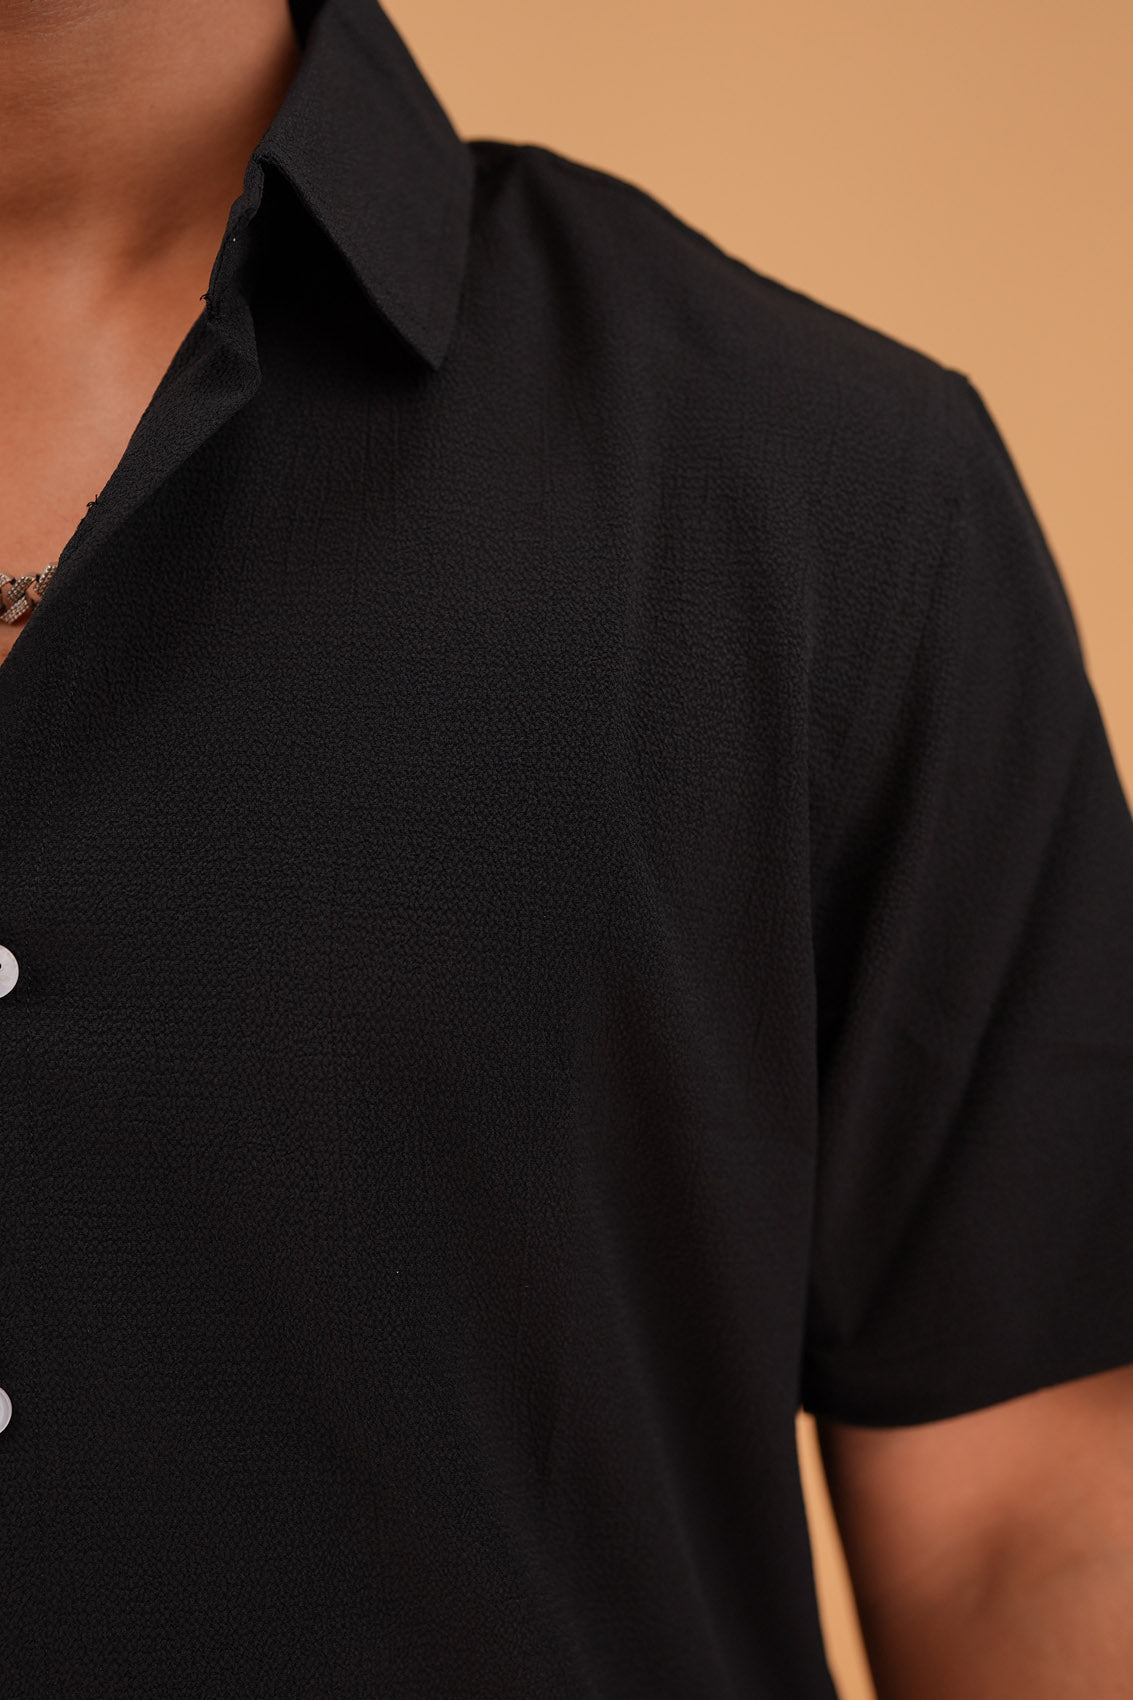 Pitch Black Half-Sleeve Shirt